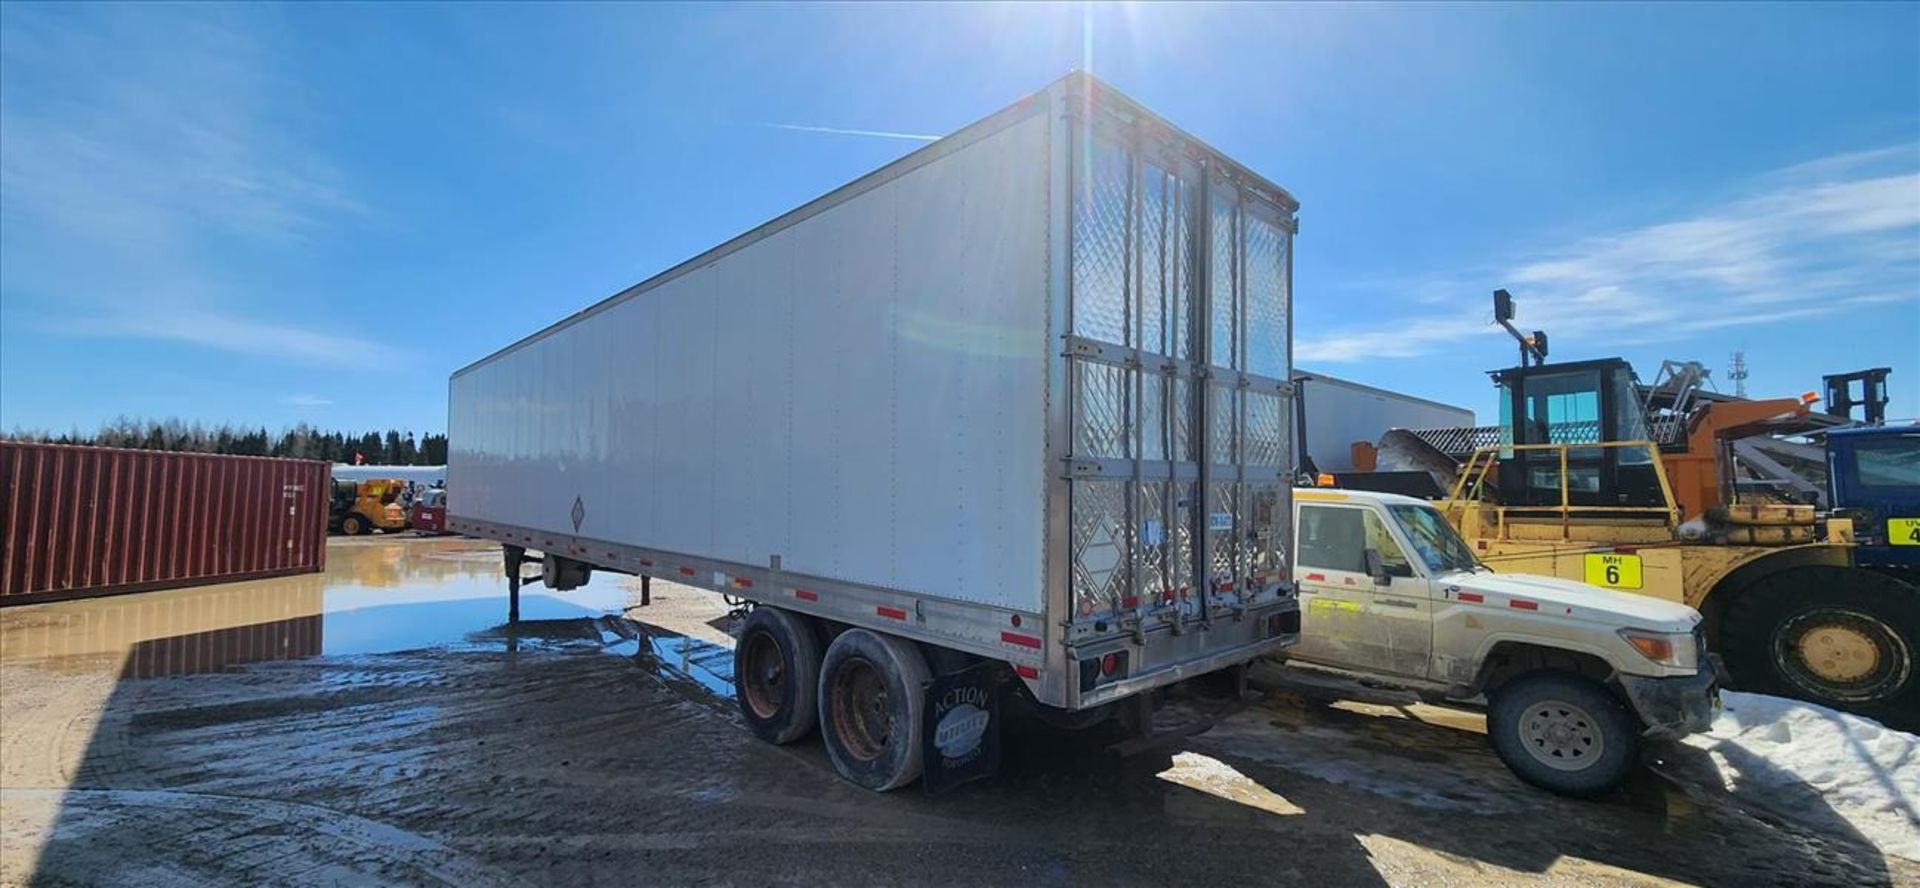 Utility hwy trailer, mod. 2000RX, VIN 1UYVS2486RM084506, 53 ft., T/A, aluminum deck, barn-doors (